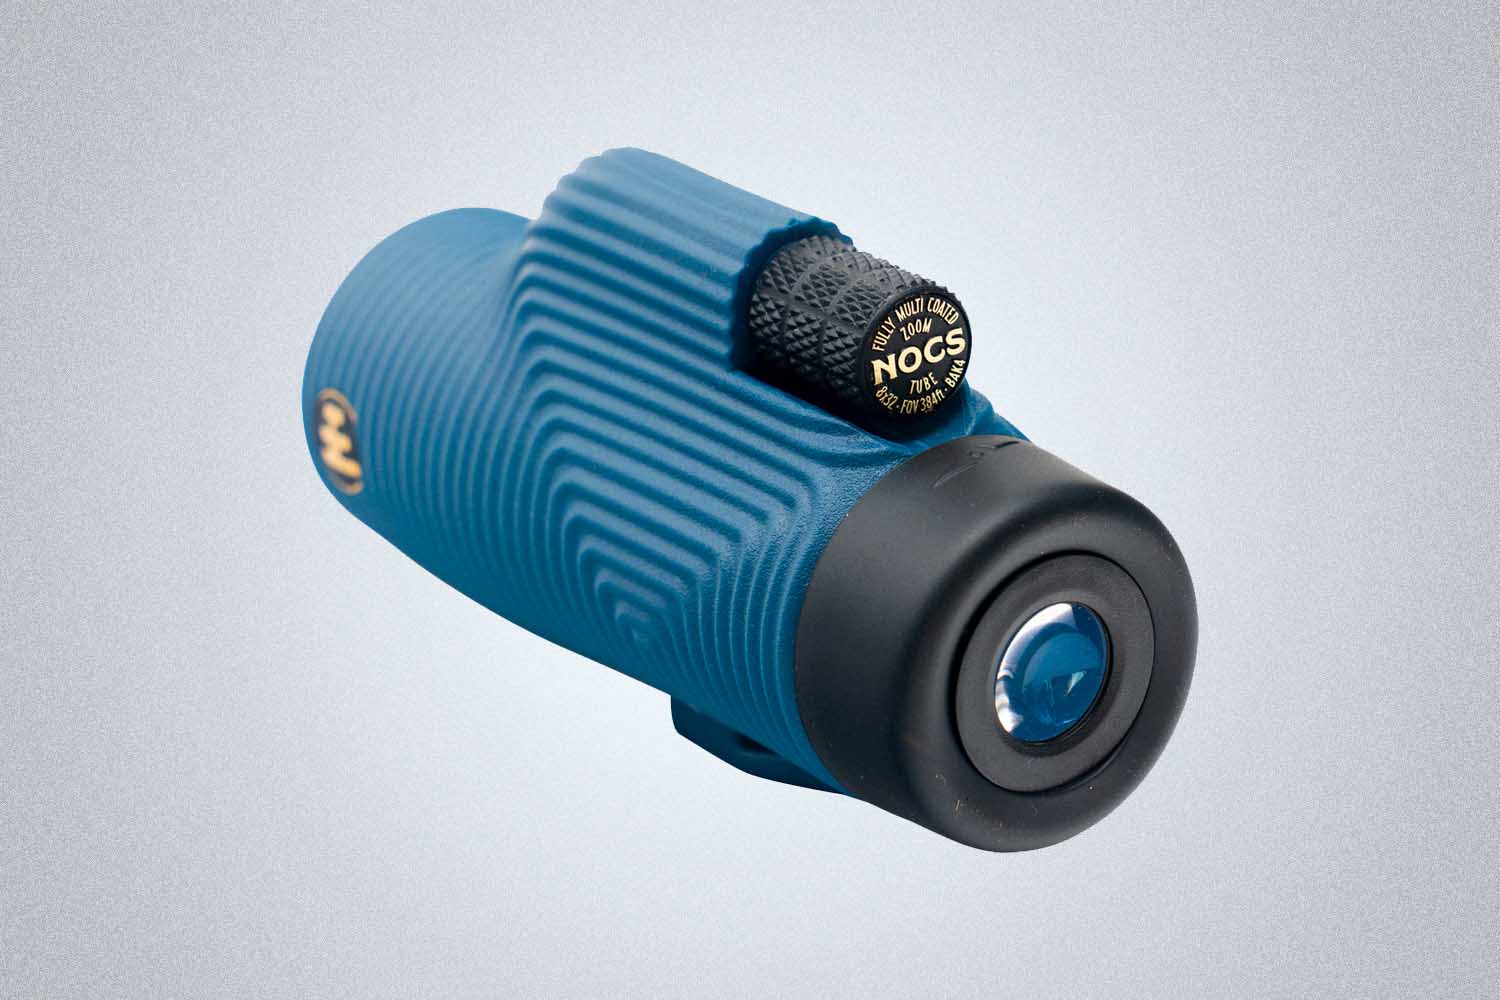 a single eye binocular device in light blue from Nocs on a grey background 